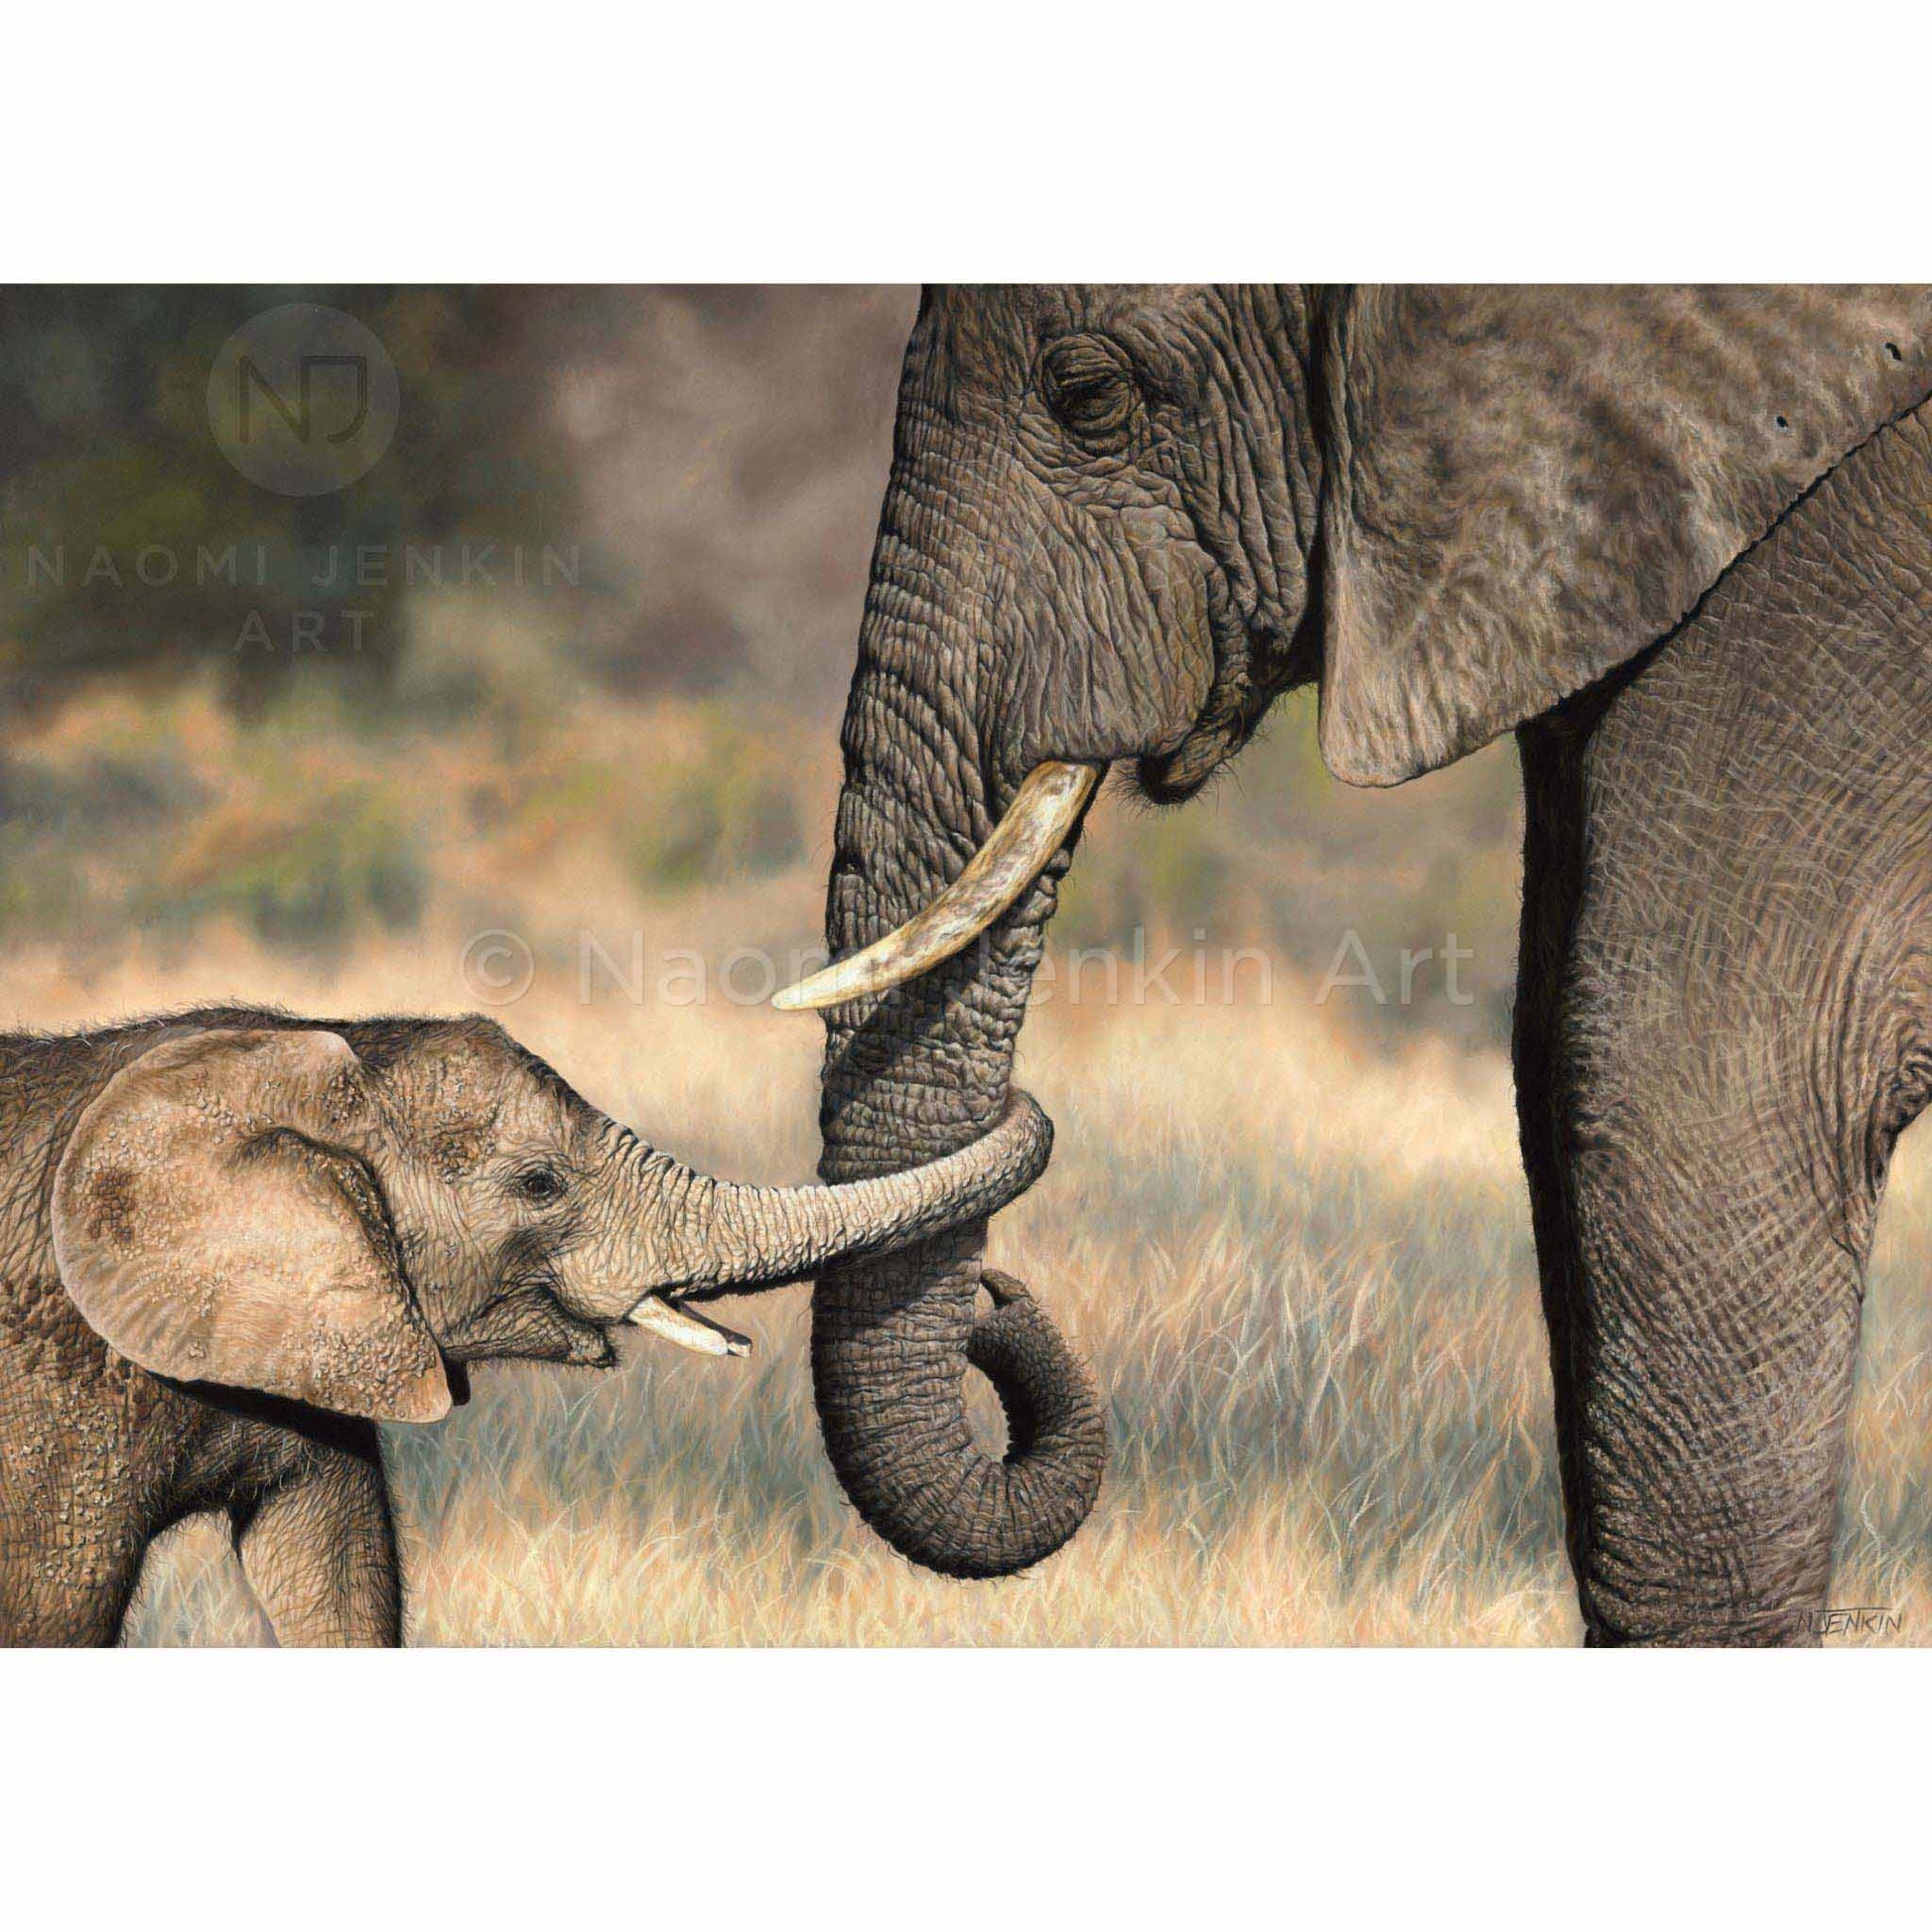 Elephant painting by wildlife artist Naomi Jenkin. 